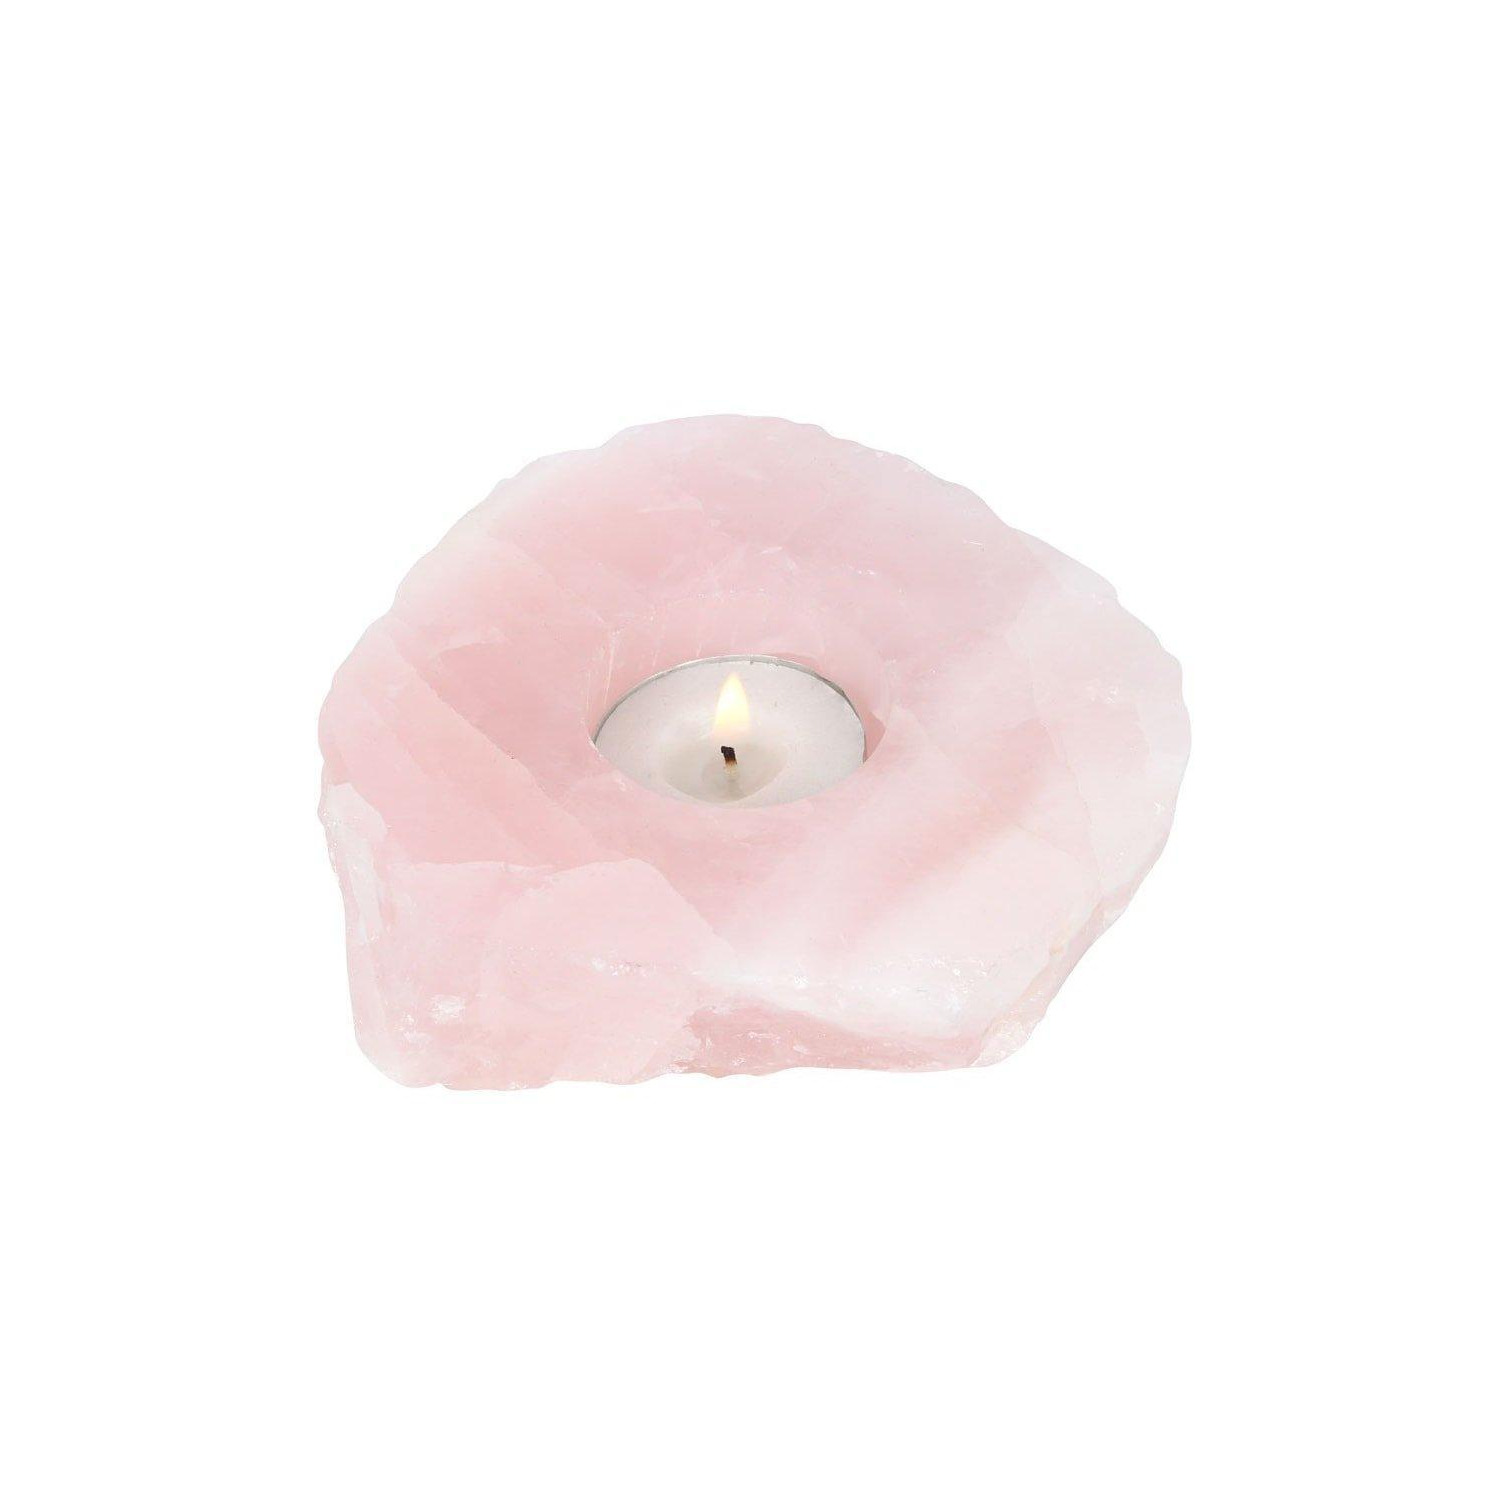 Rose Quartz Candle Holder - image 1